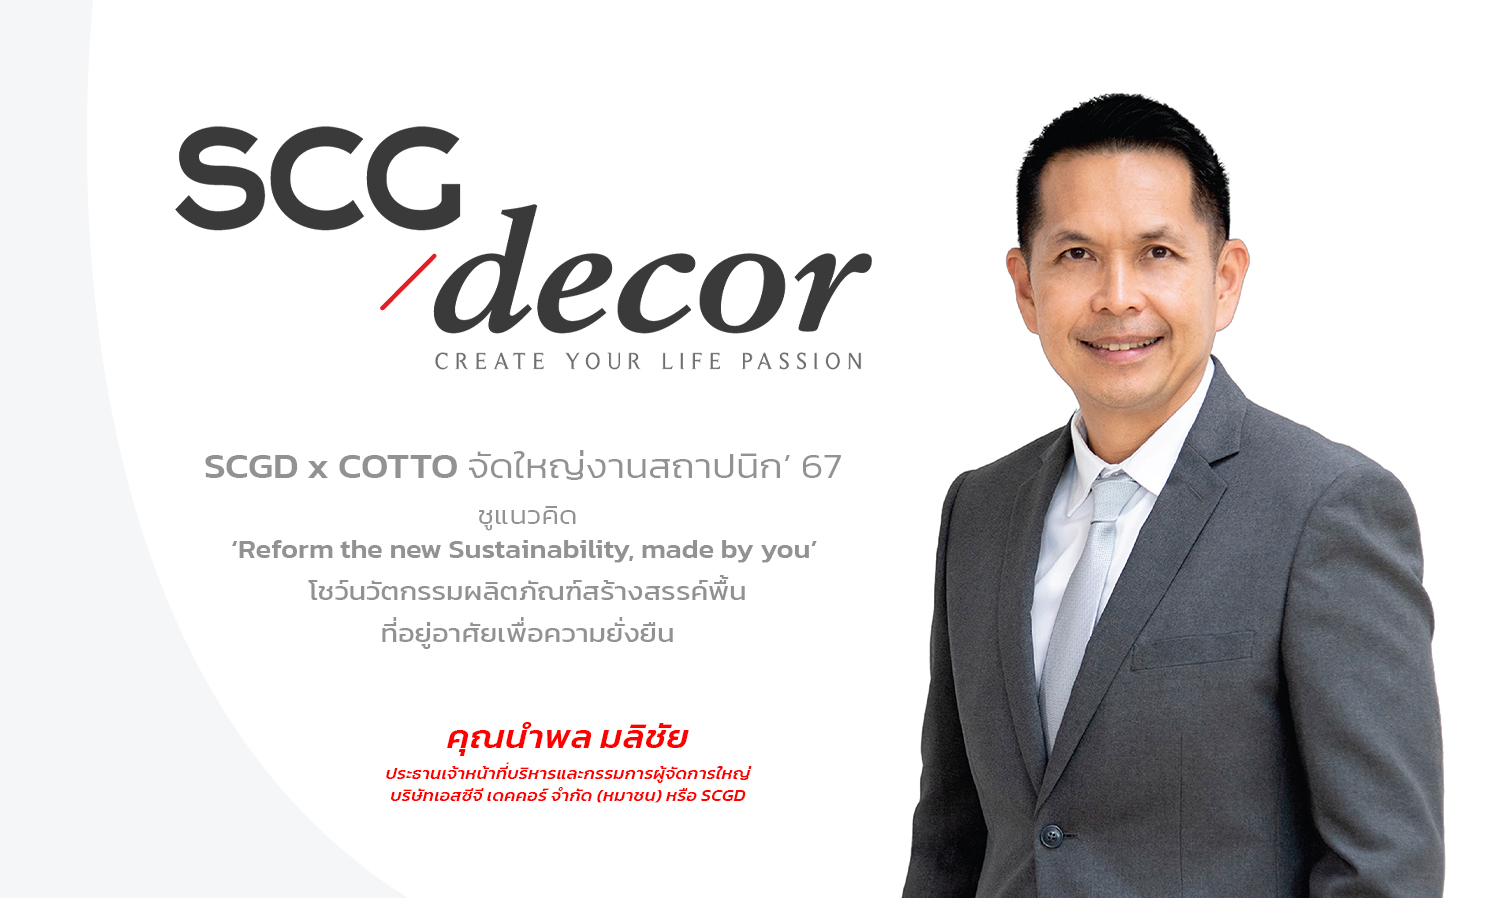 SCGD x COTTO จัดใหญ่งานสถาปนิก 67  ชูแนวคิด ‘Reform the new Sustainability, made by you โชว์นวัตกรรมผลิตภัณฑ์สร้างสรรค์พื้นที่อยู่อาศัยเพื่อความยั่งยืน